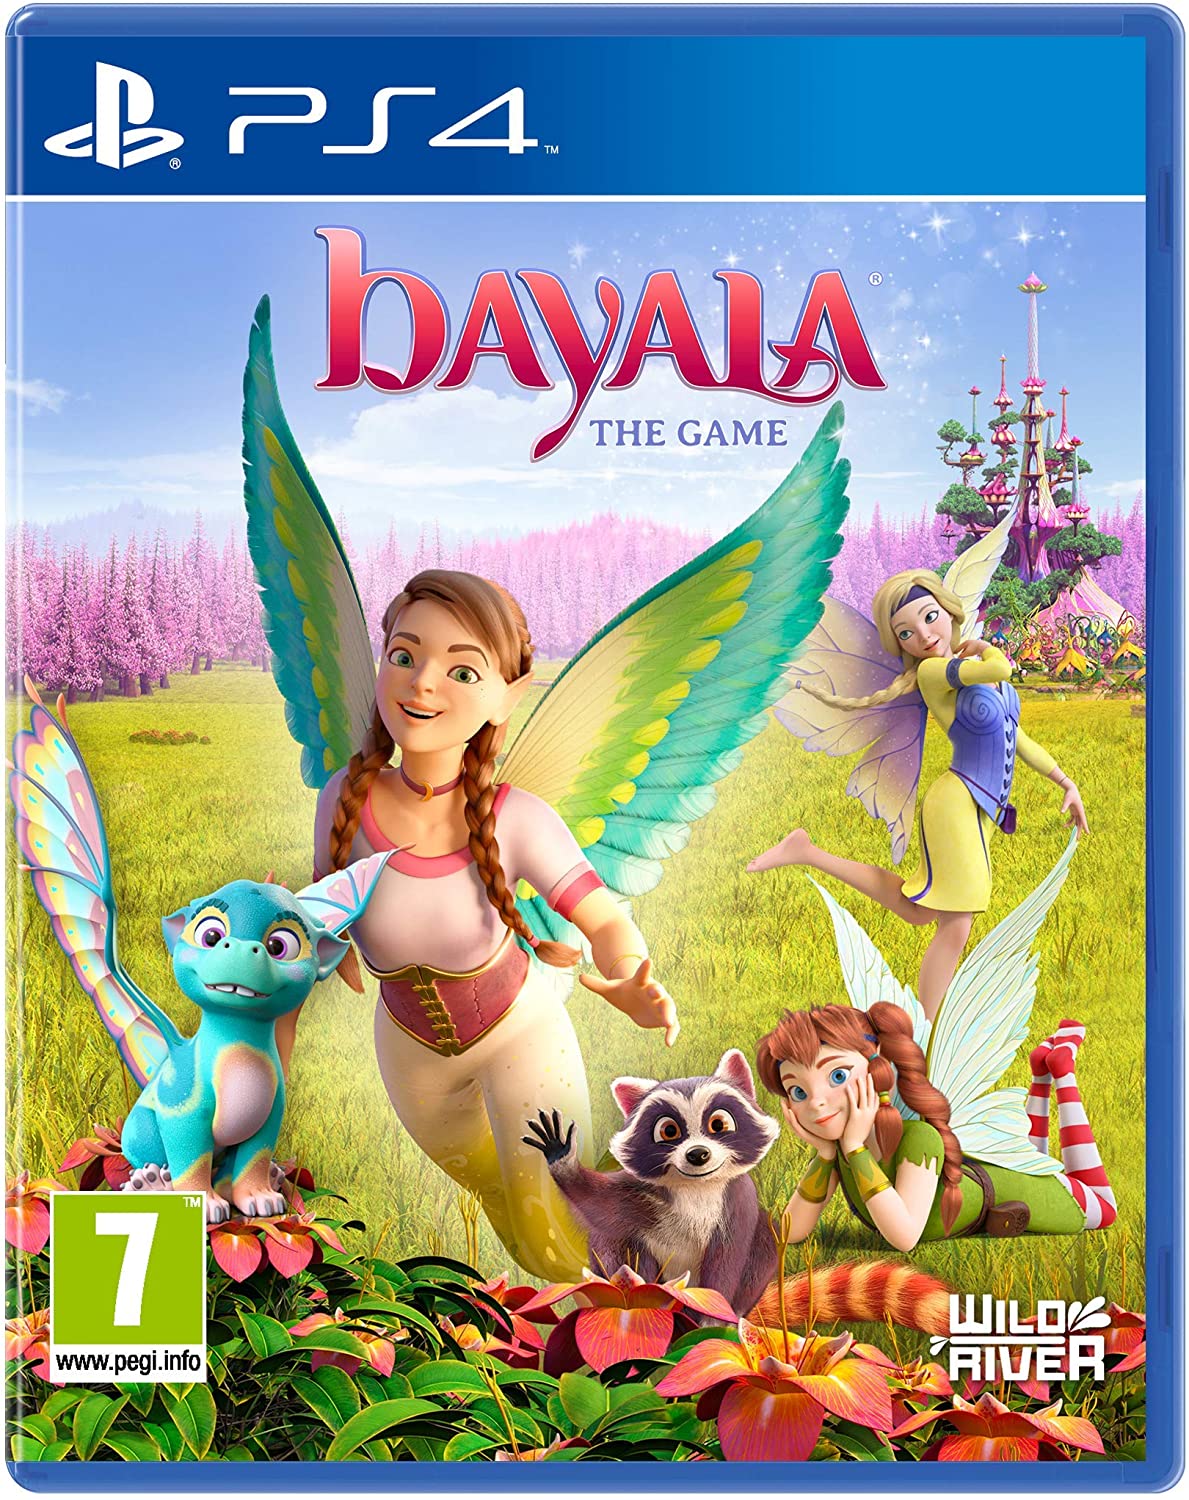 Bayala - The Game (EUR)*